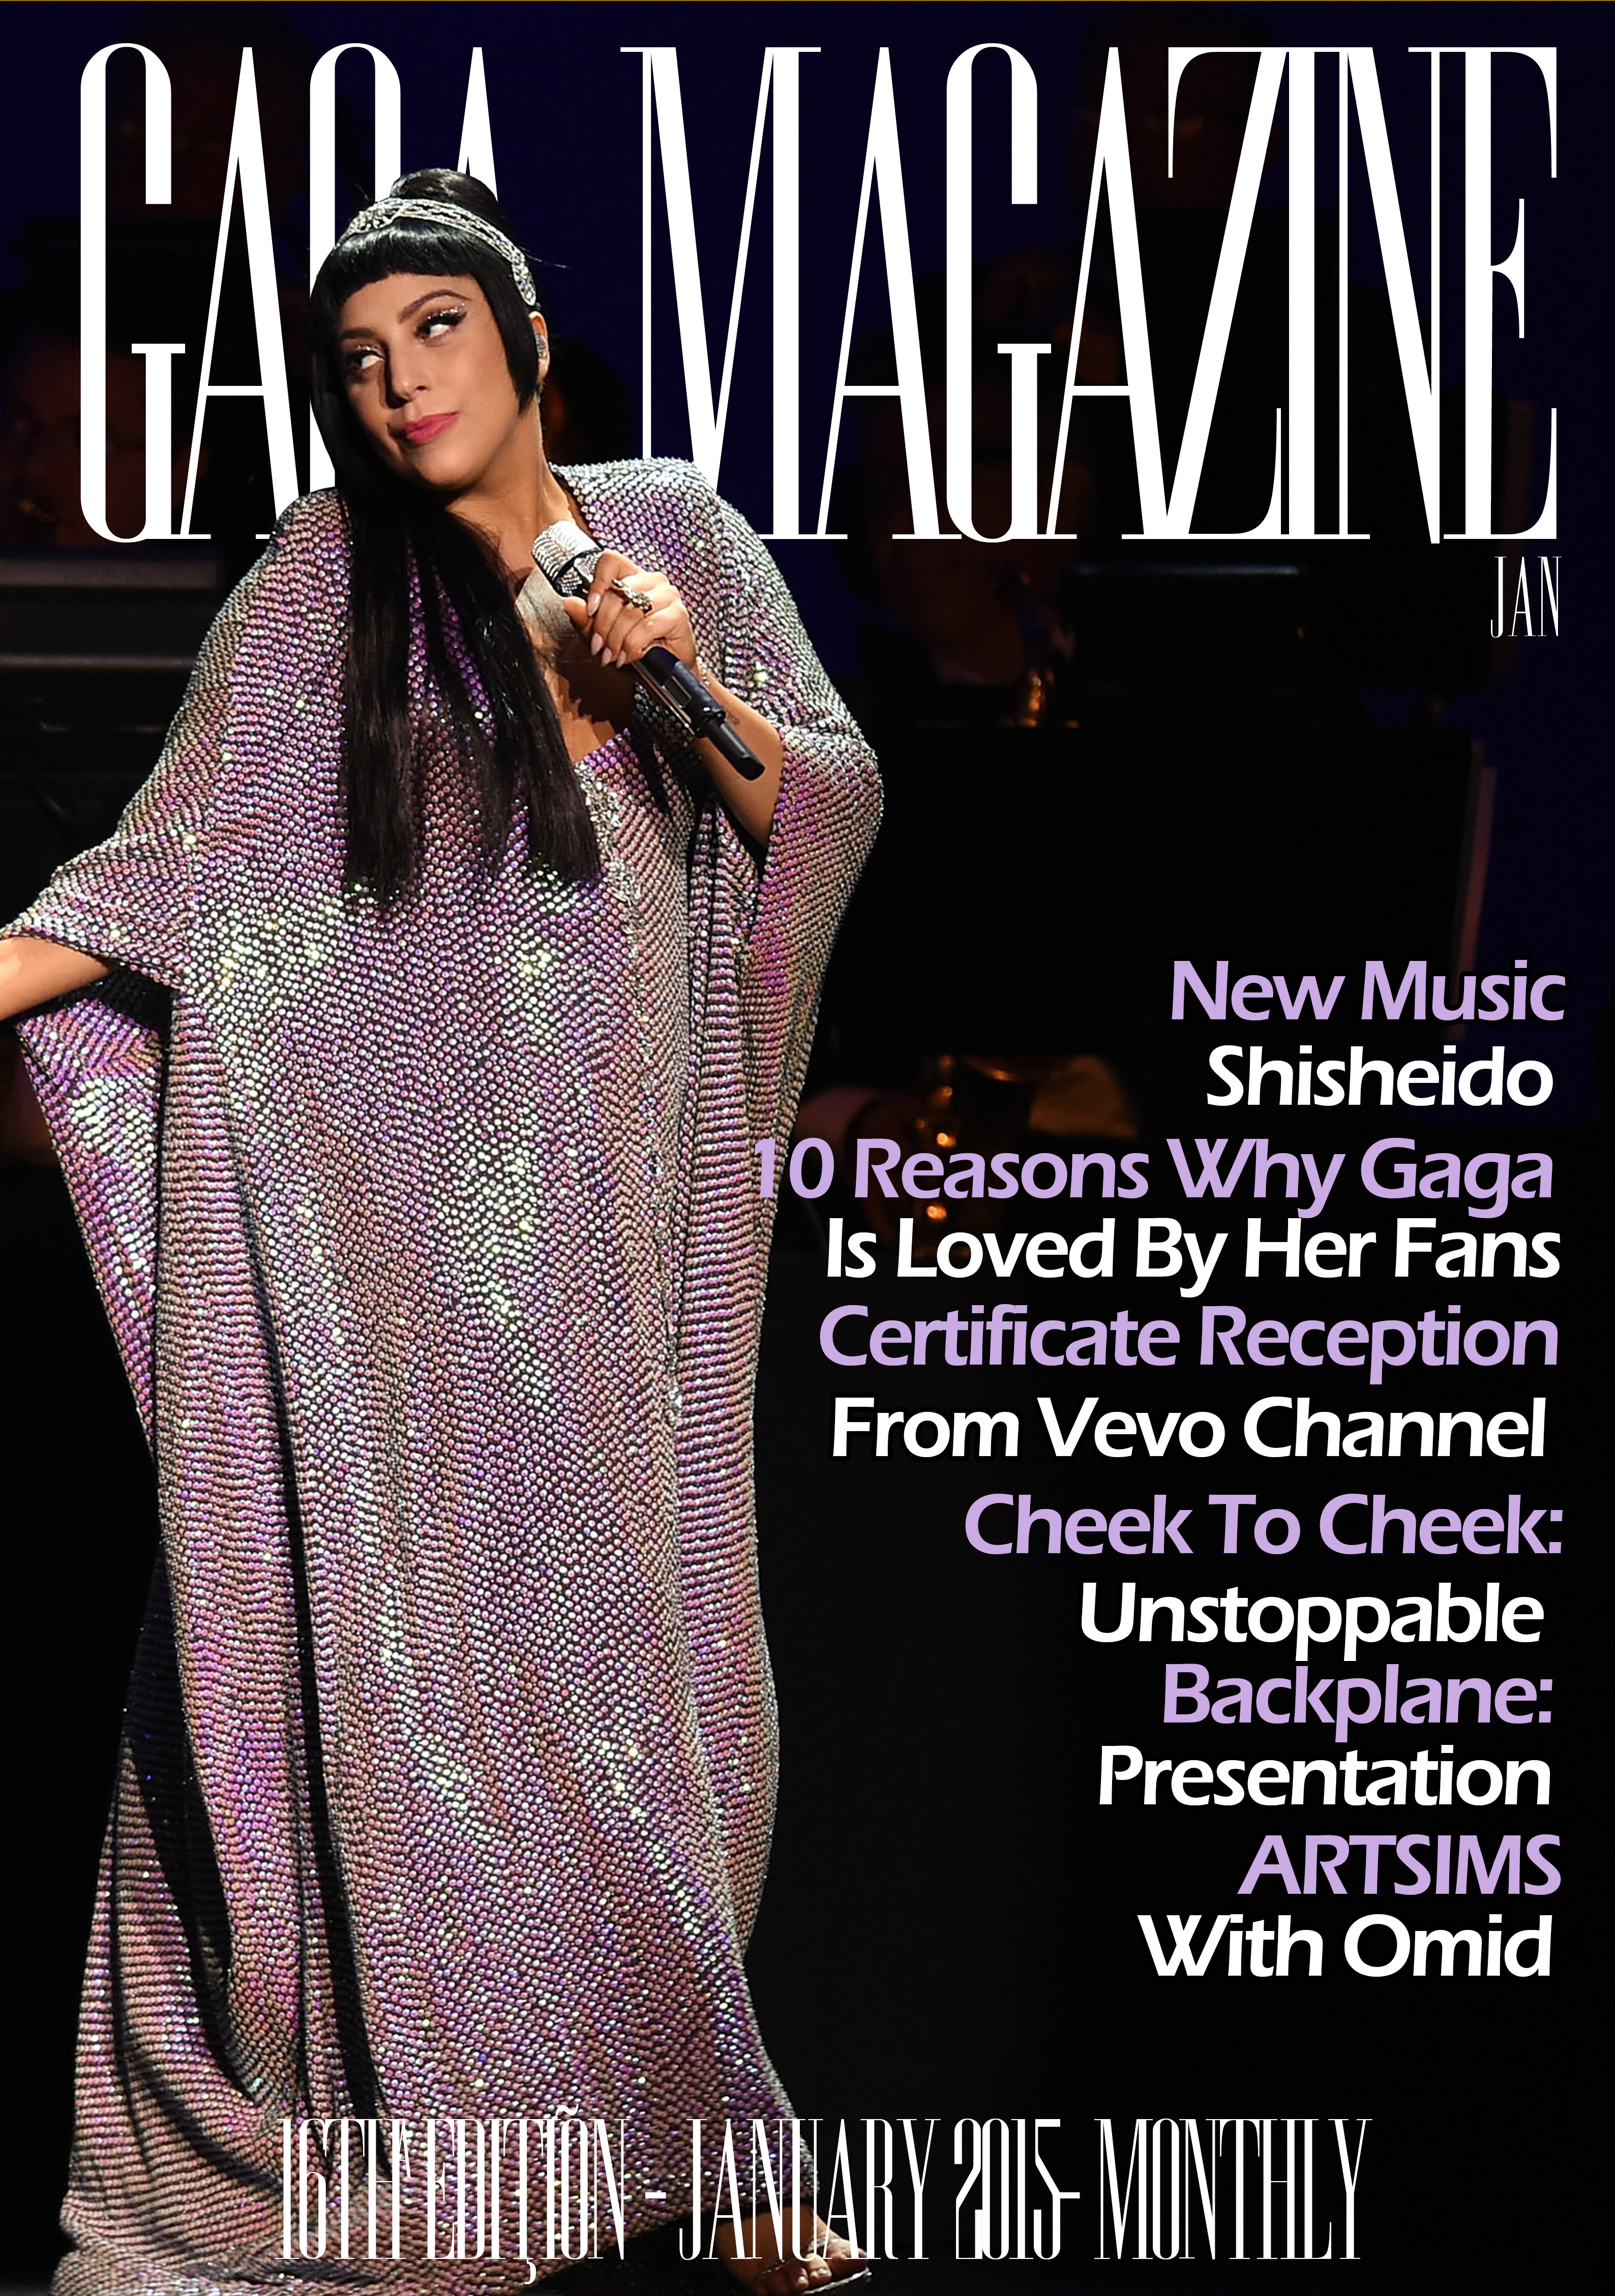 Gaga Magazine - 16th Edition - January 2015